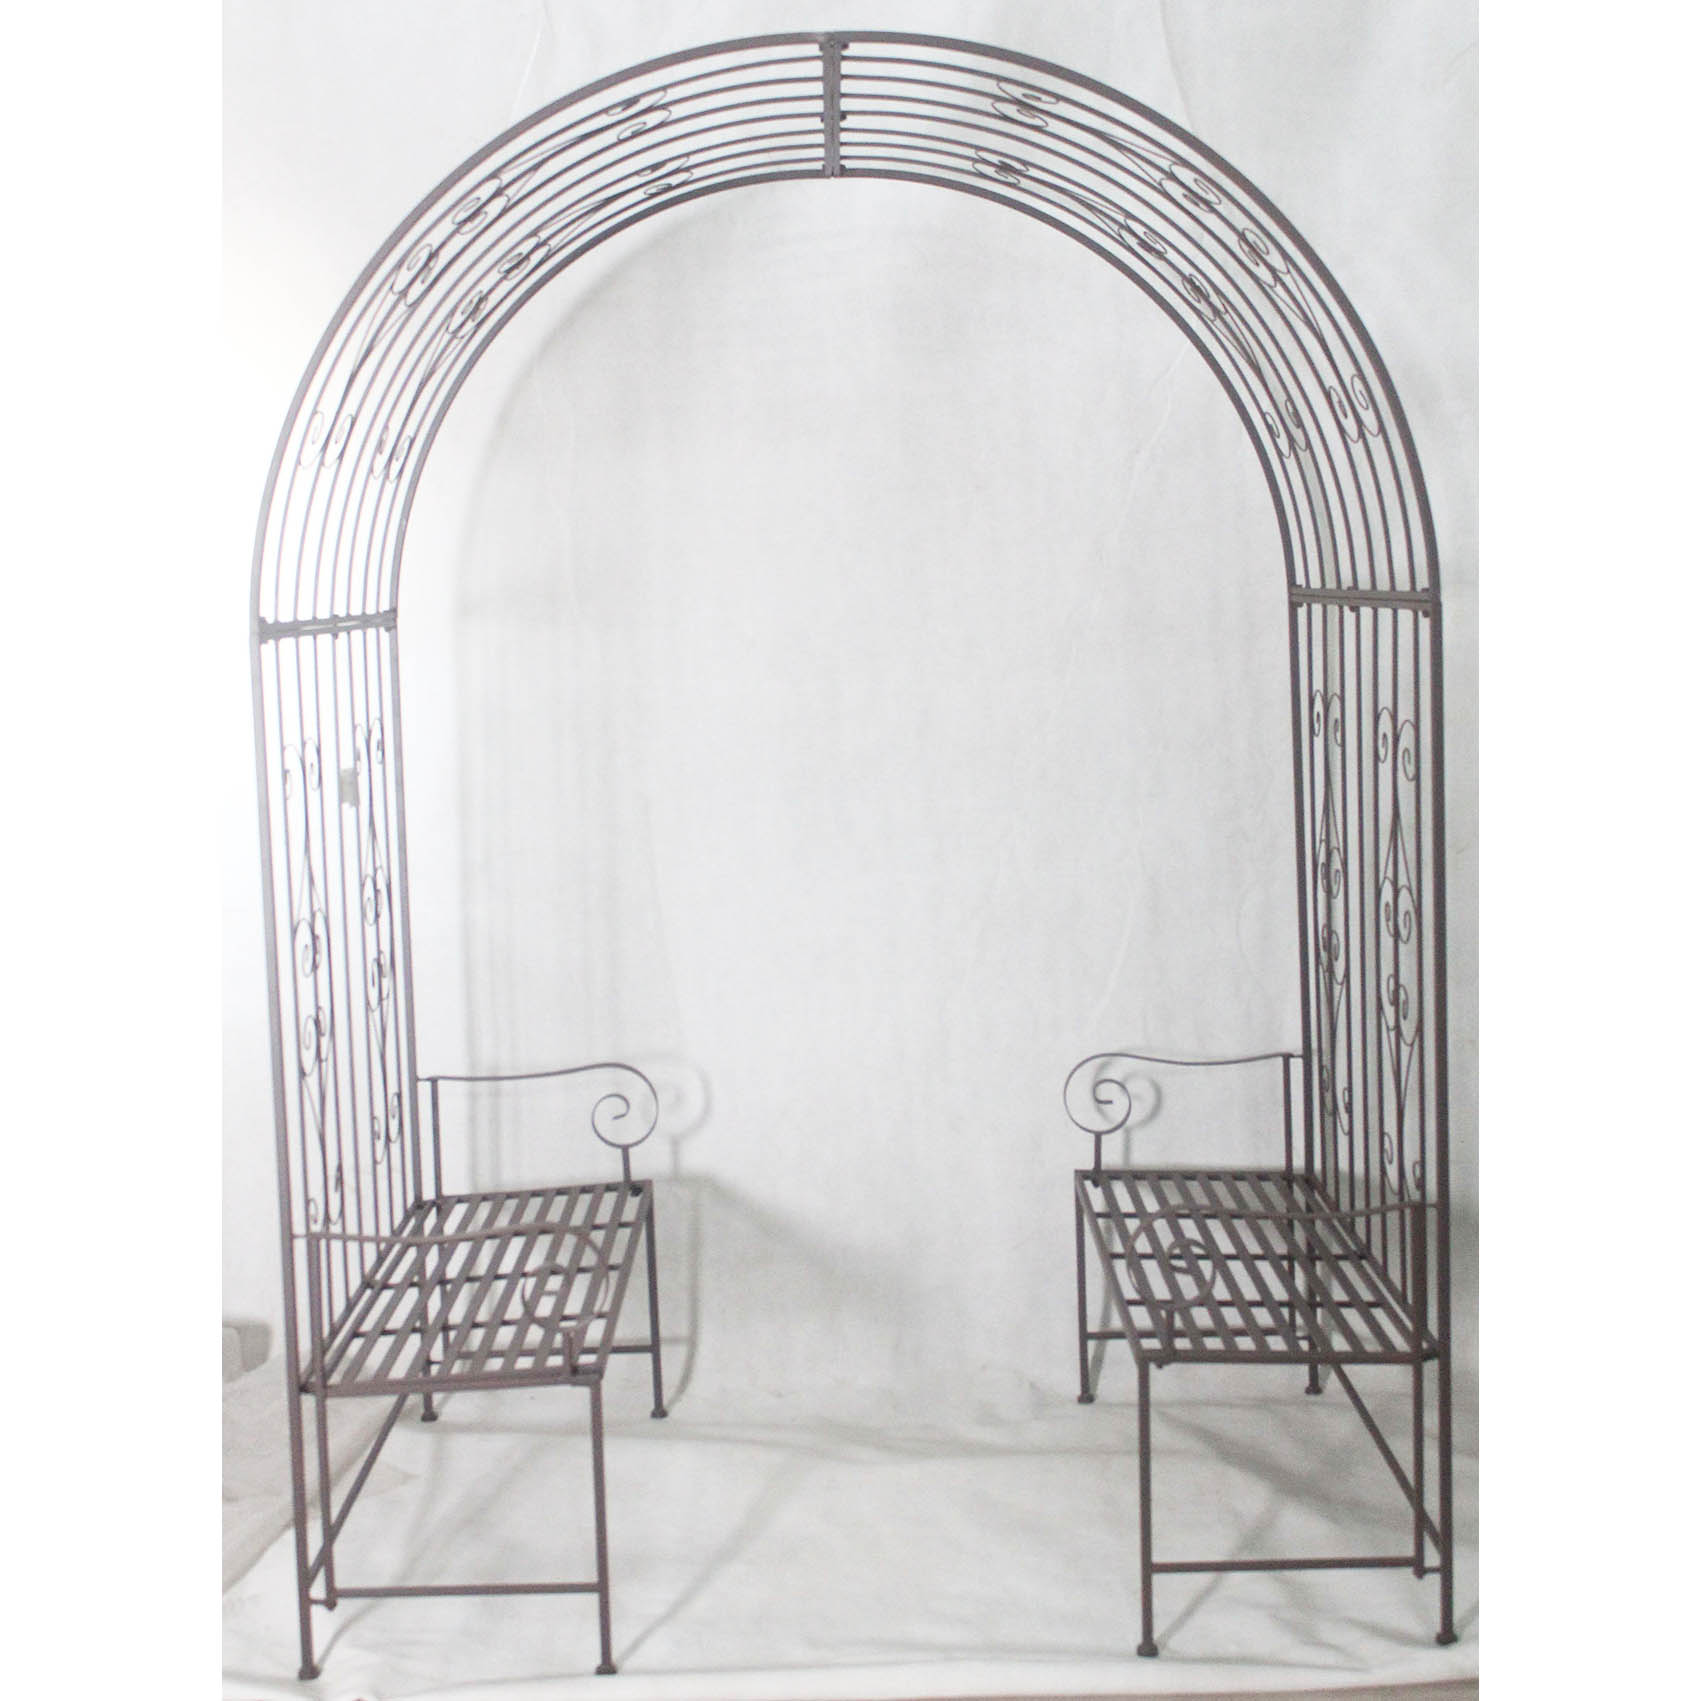 Rectangular metal garden arch with bench